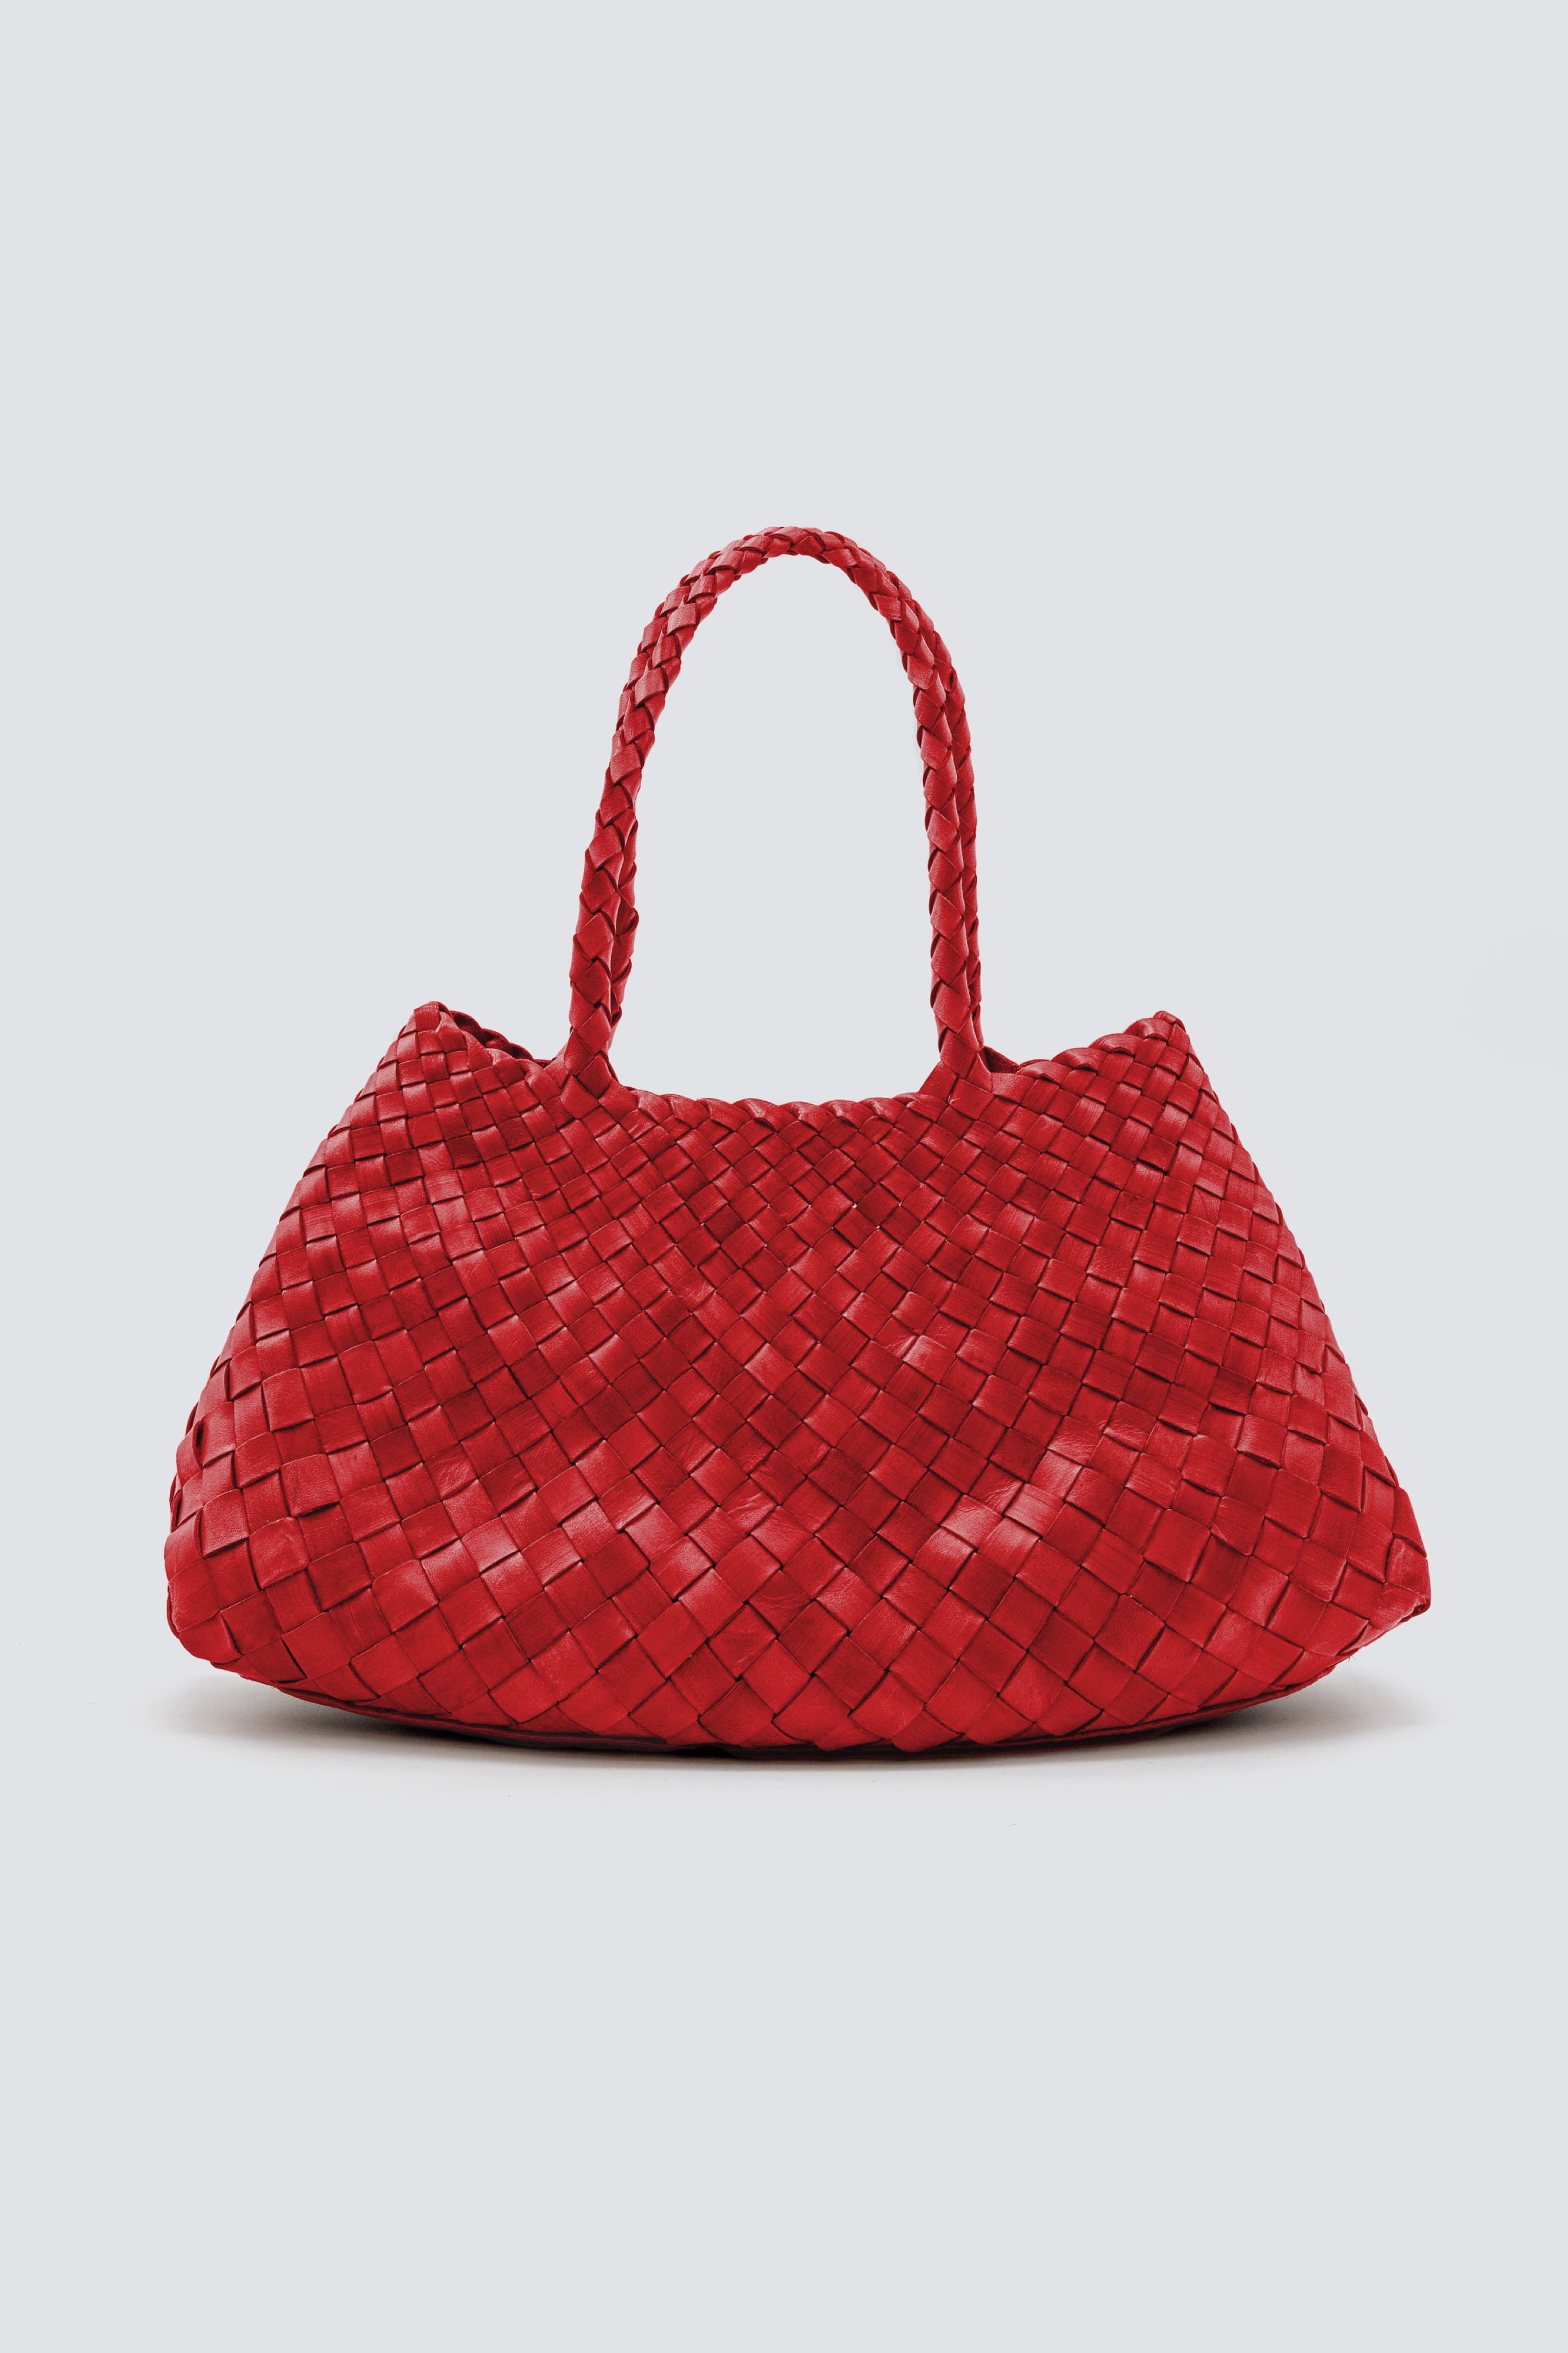 Free Non-Woven Shopping Bag Mockup :: Behance